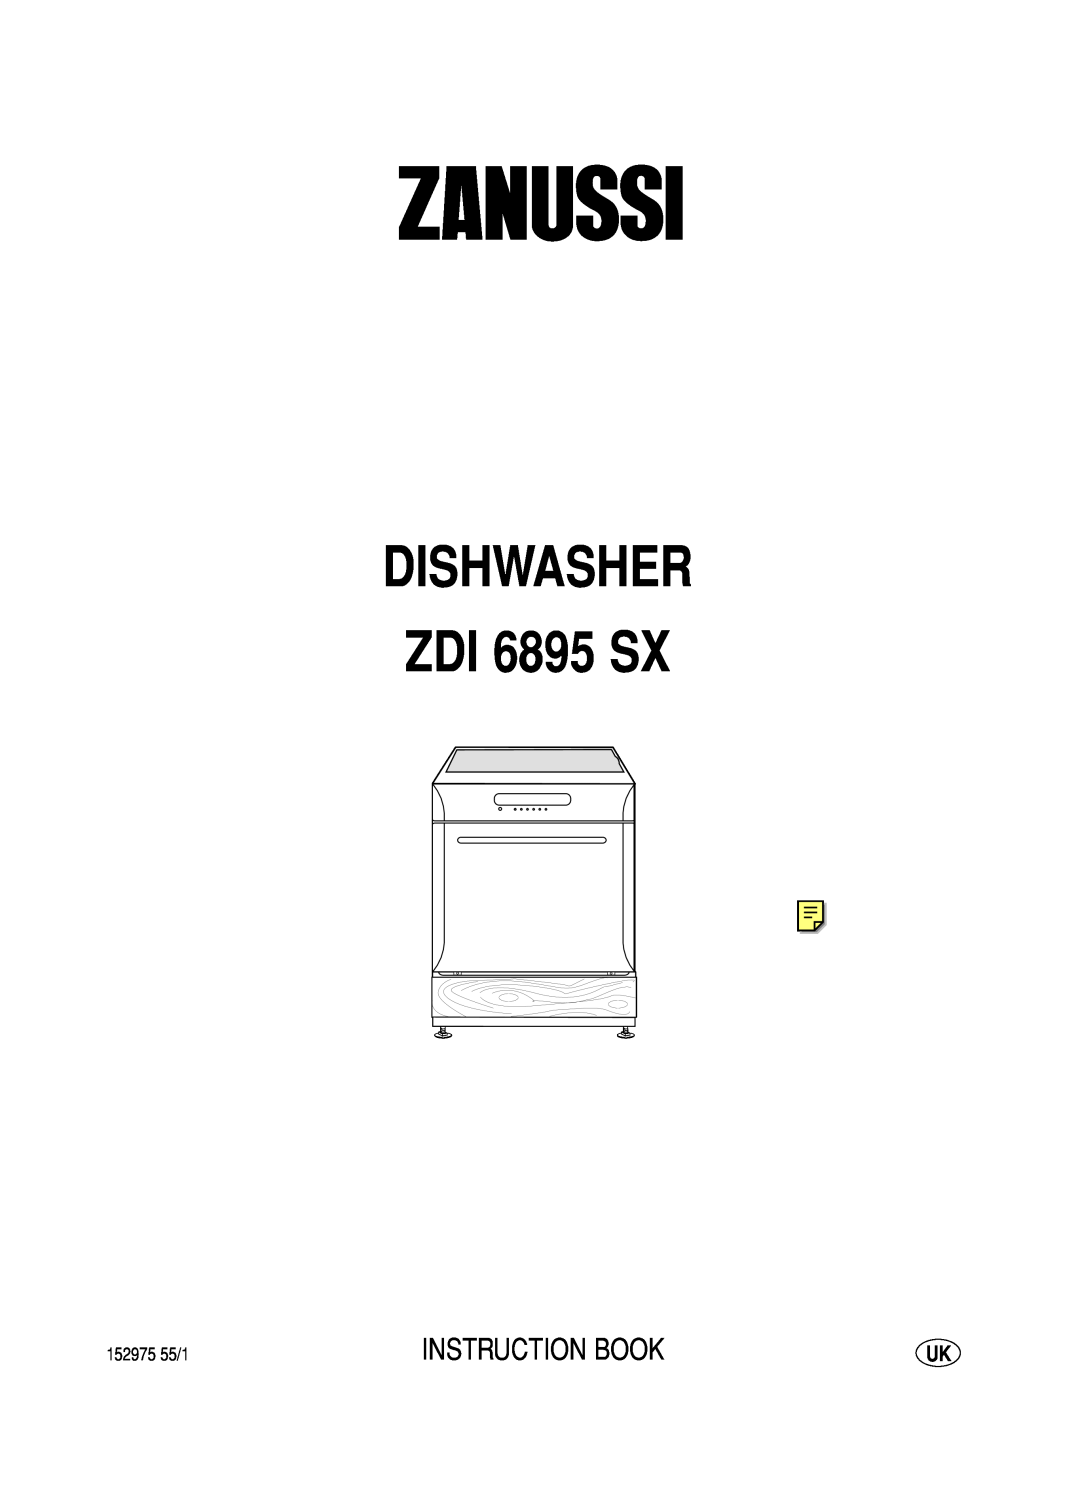 Zanussi ZDI 6895 SX manual Dishwasher, Instruction Book, 152975 55/1 